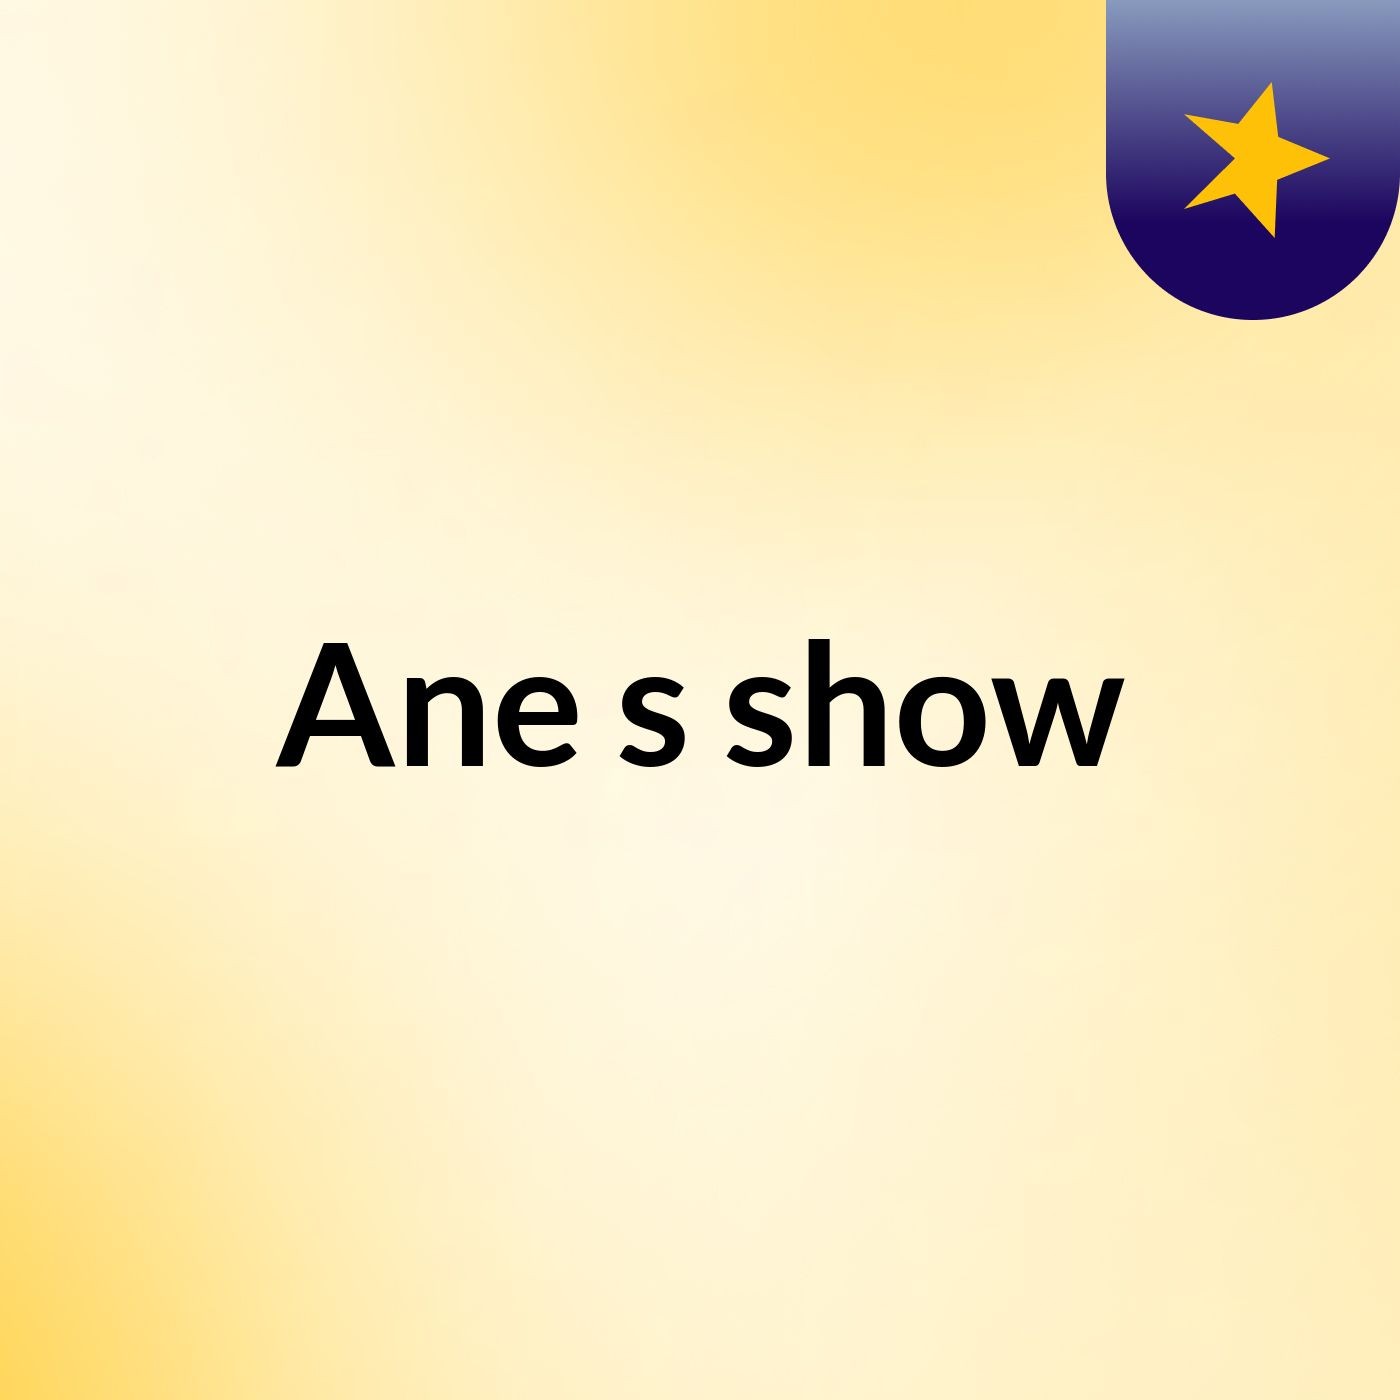 Ane's show